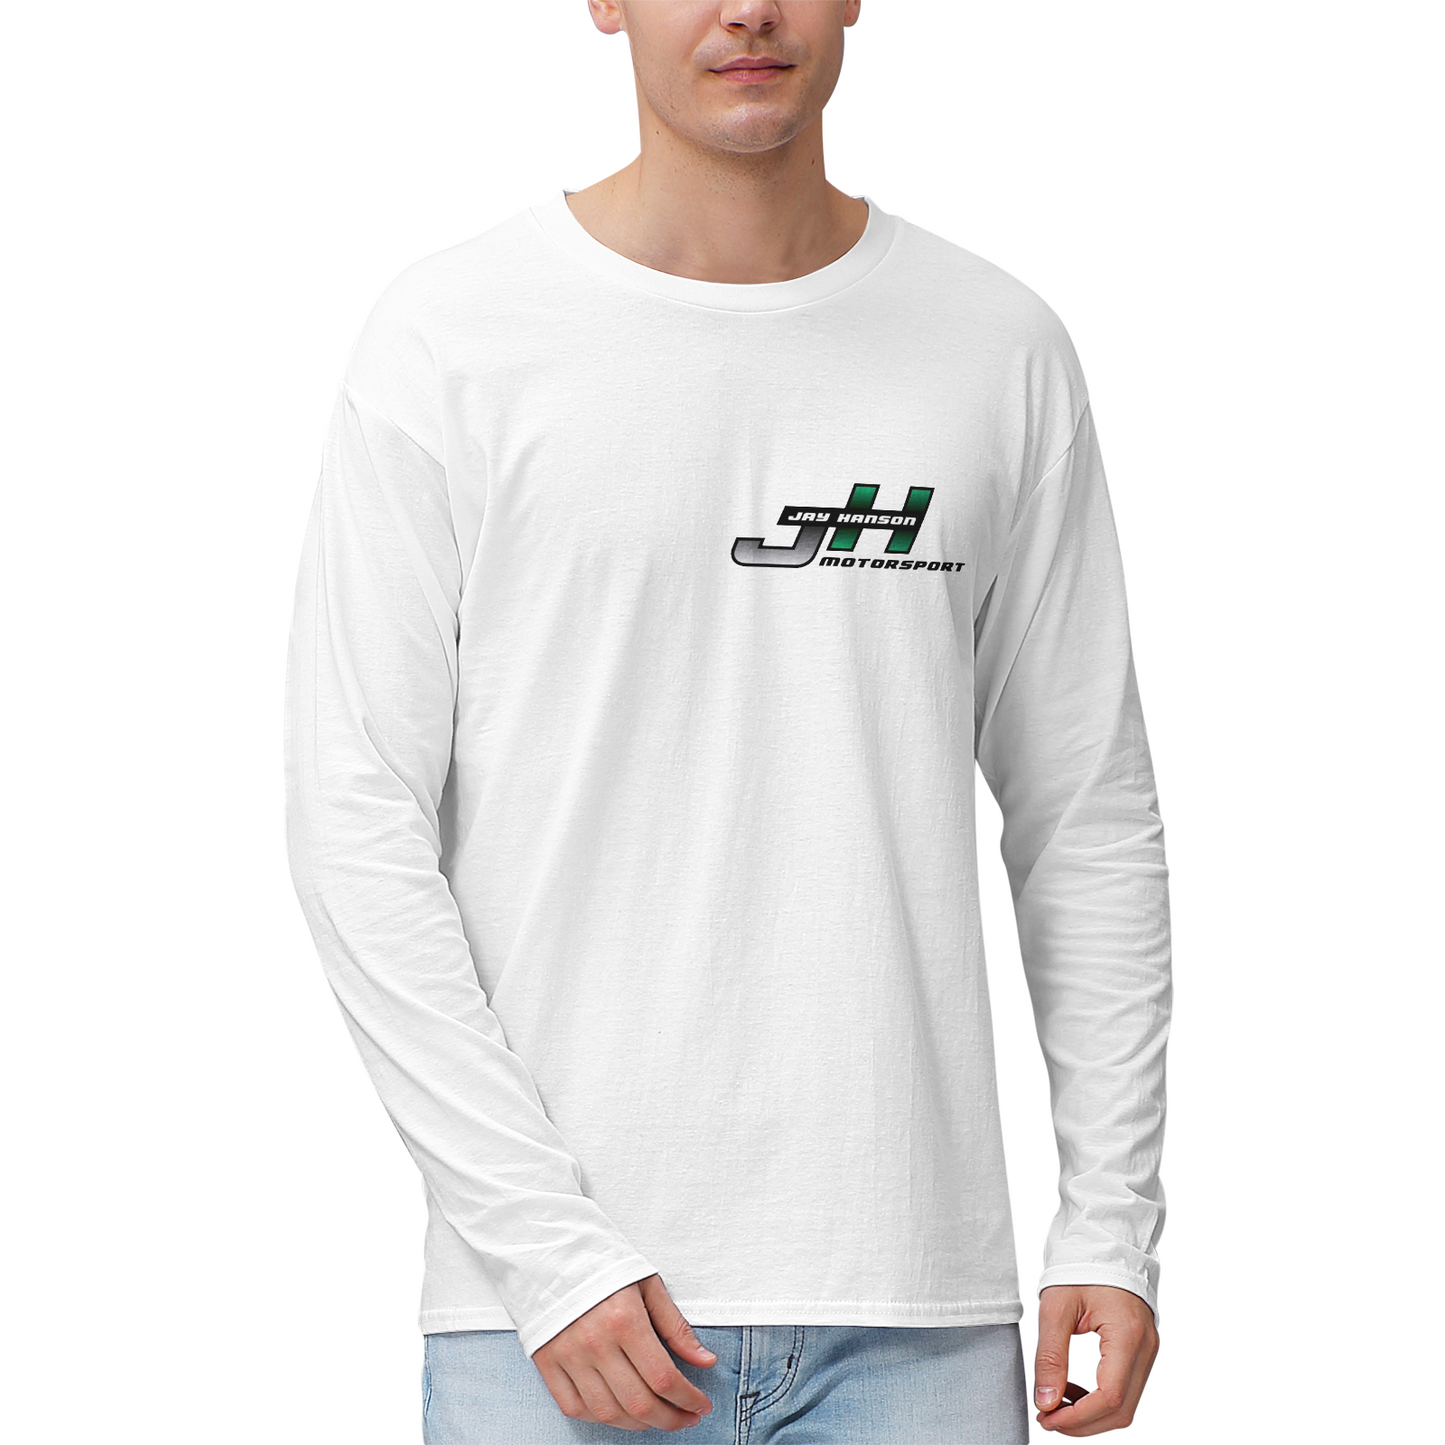 JAY HANSON MOTORSPORT 100% Lightweight Cotton Long Sleeve Shirts